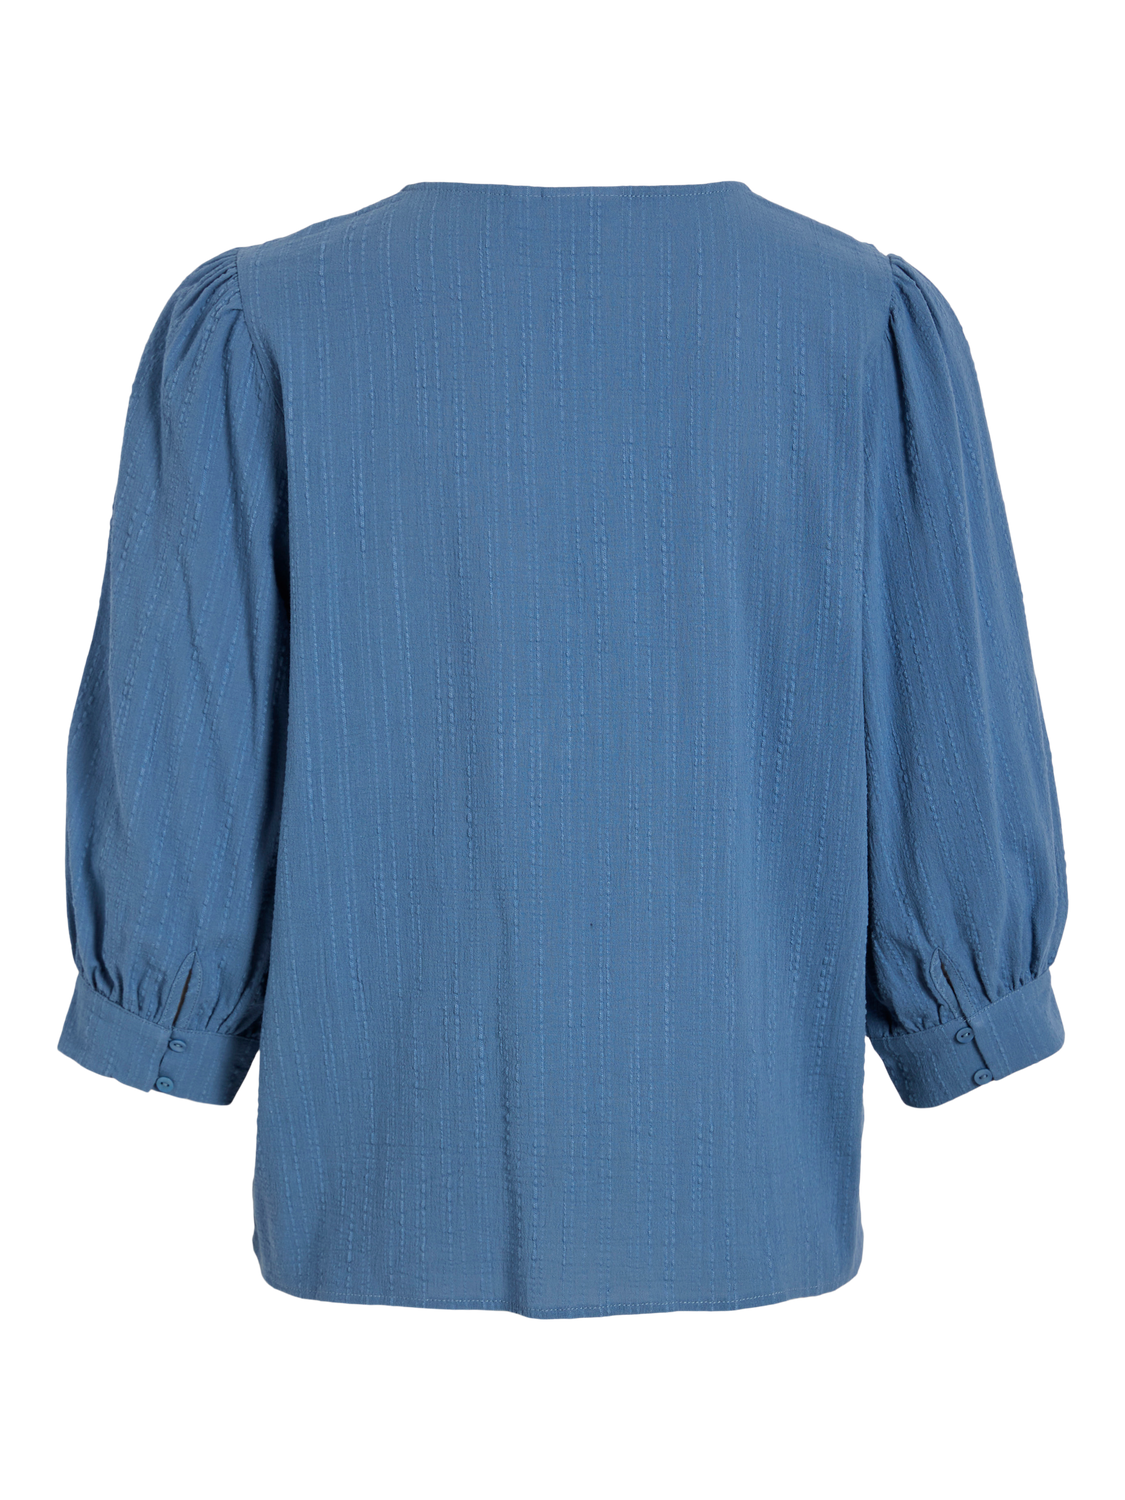 VICLIO T-Shirts & Tops - Coronet Blue